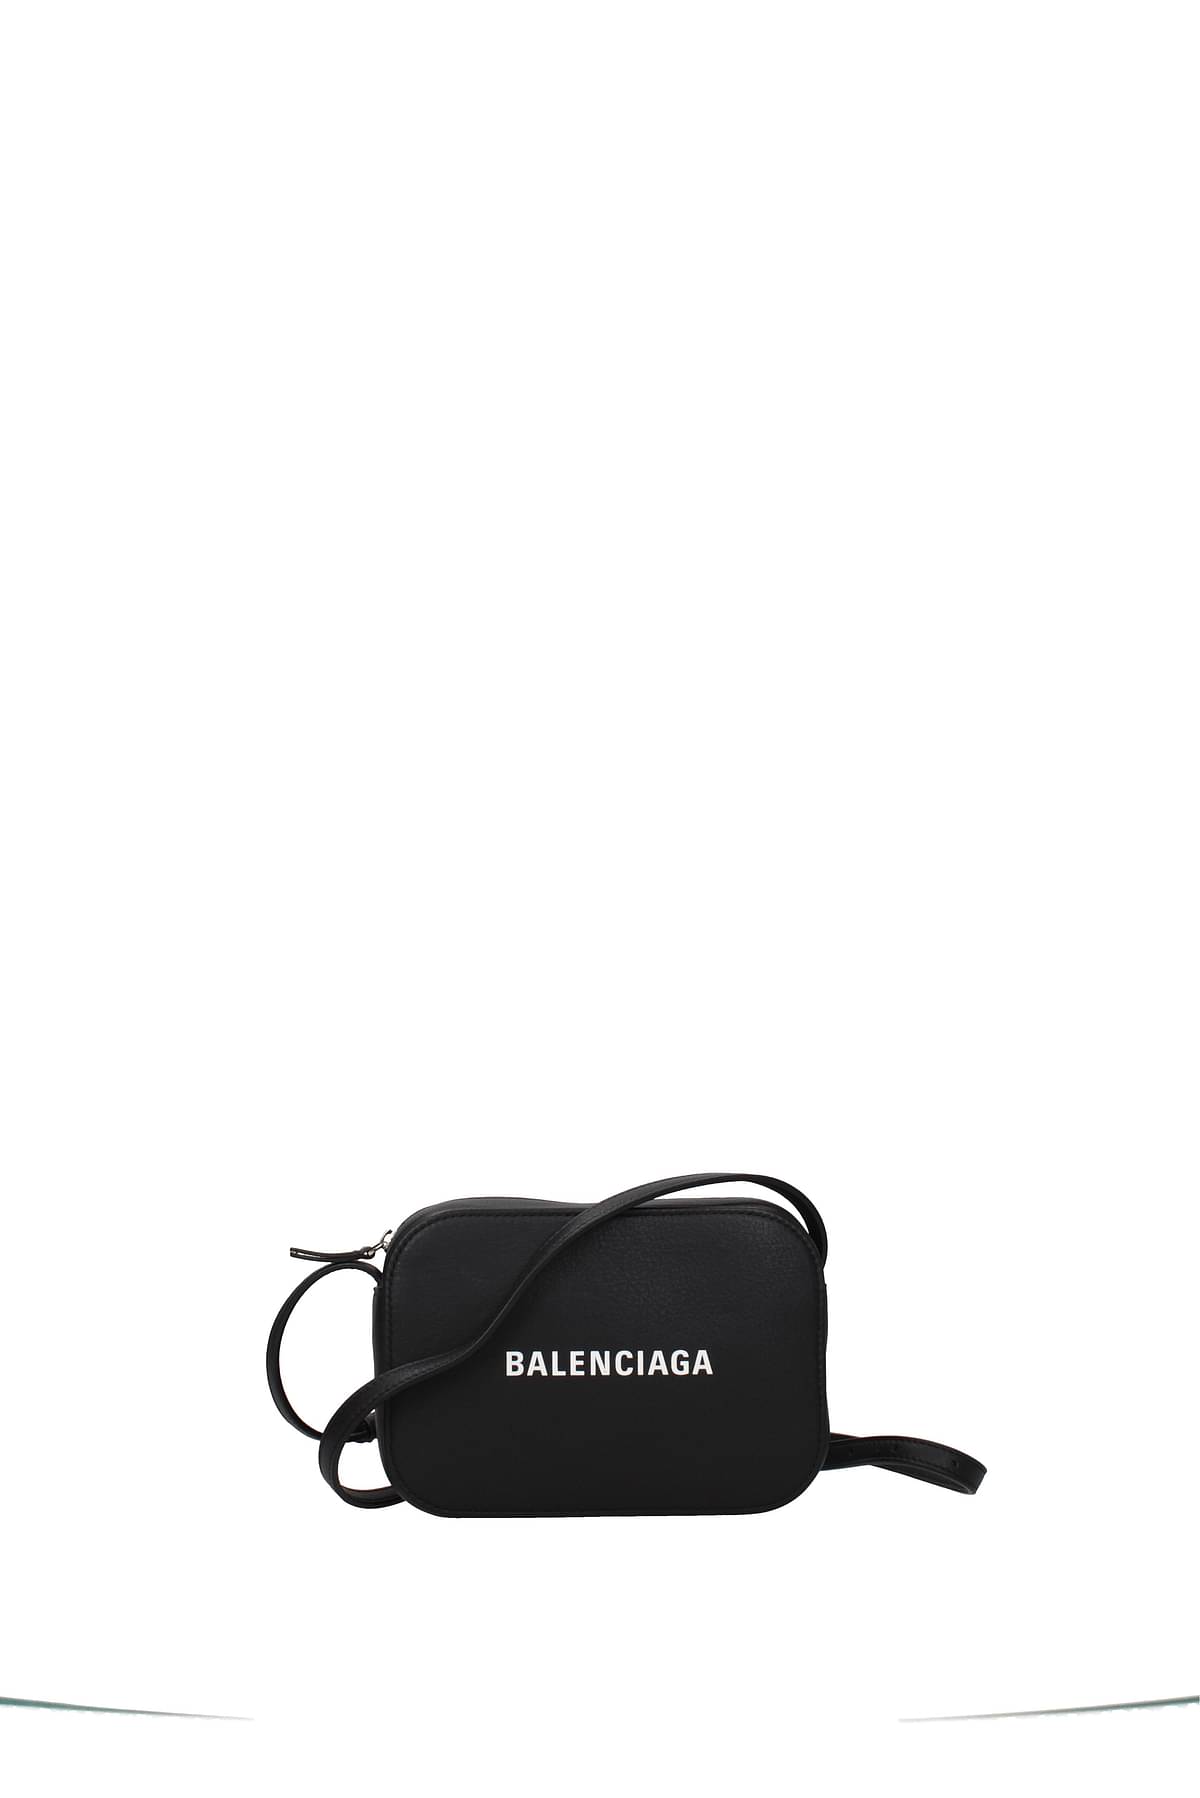 NEW Authentic Balenciaga Women's Ville XS Camera Bag in Black